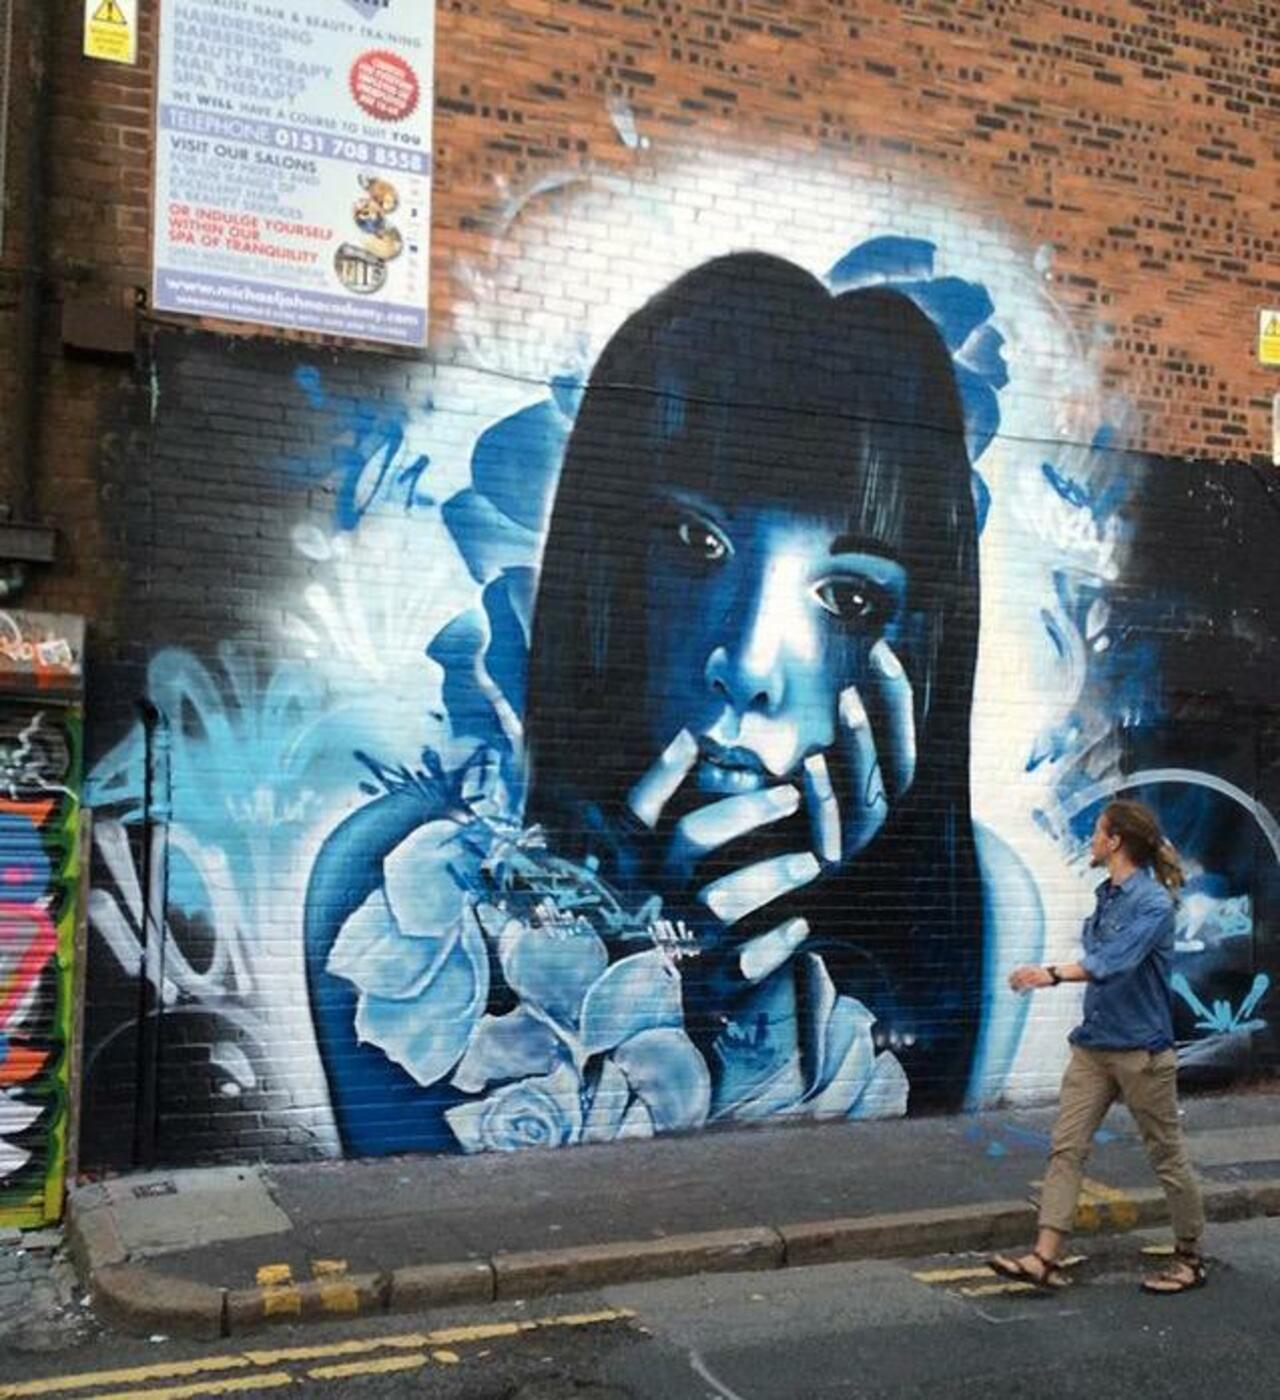 RT @GoogleStreetArt: New Street Art by DMC in Cropper St. Liverpool 

#art #arte #mural #streetart http://t.co/J2IQ7ht5w1